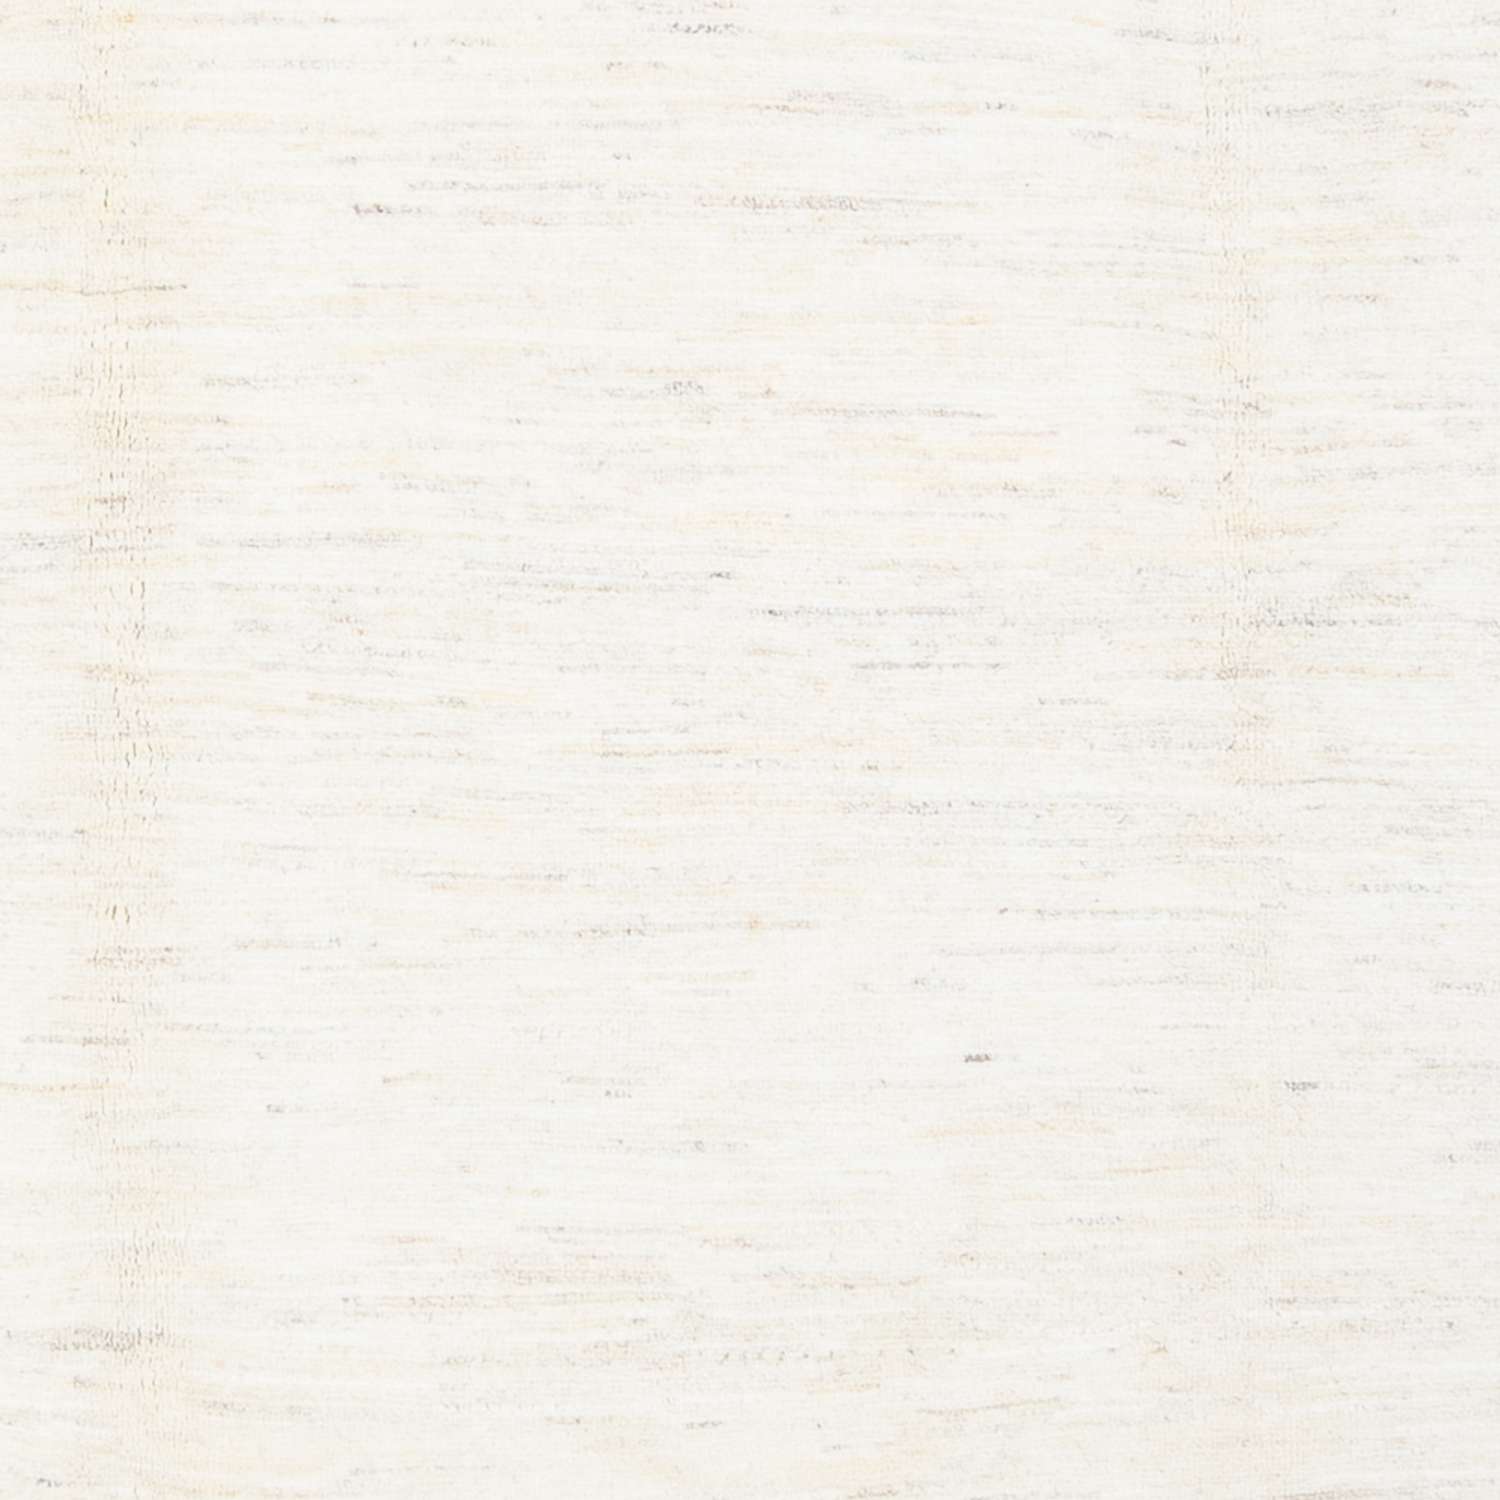 Tapete Gabbeh - Persa praça  - 207 x 207 cm - branco